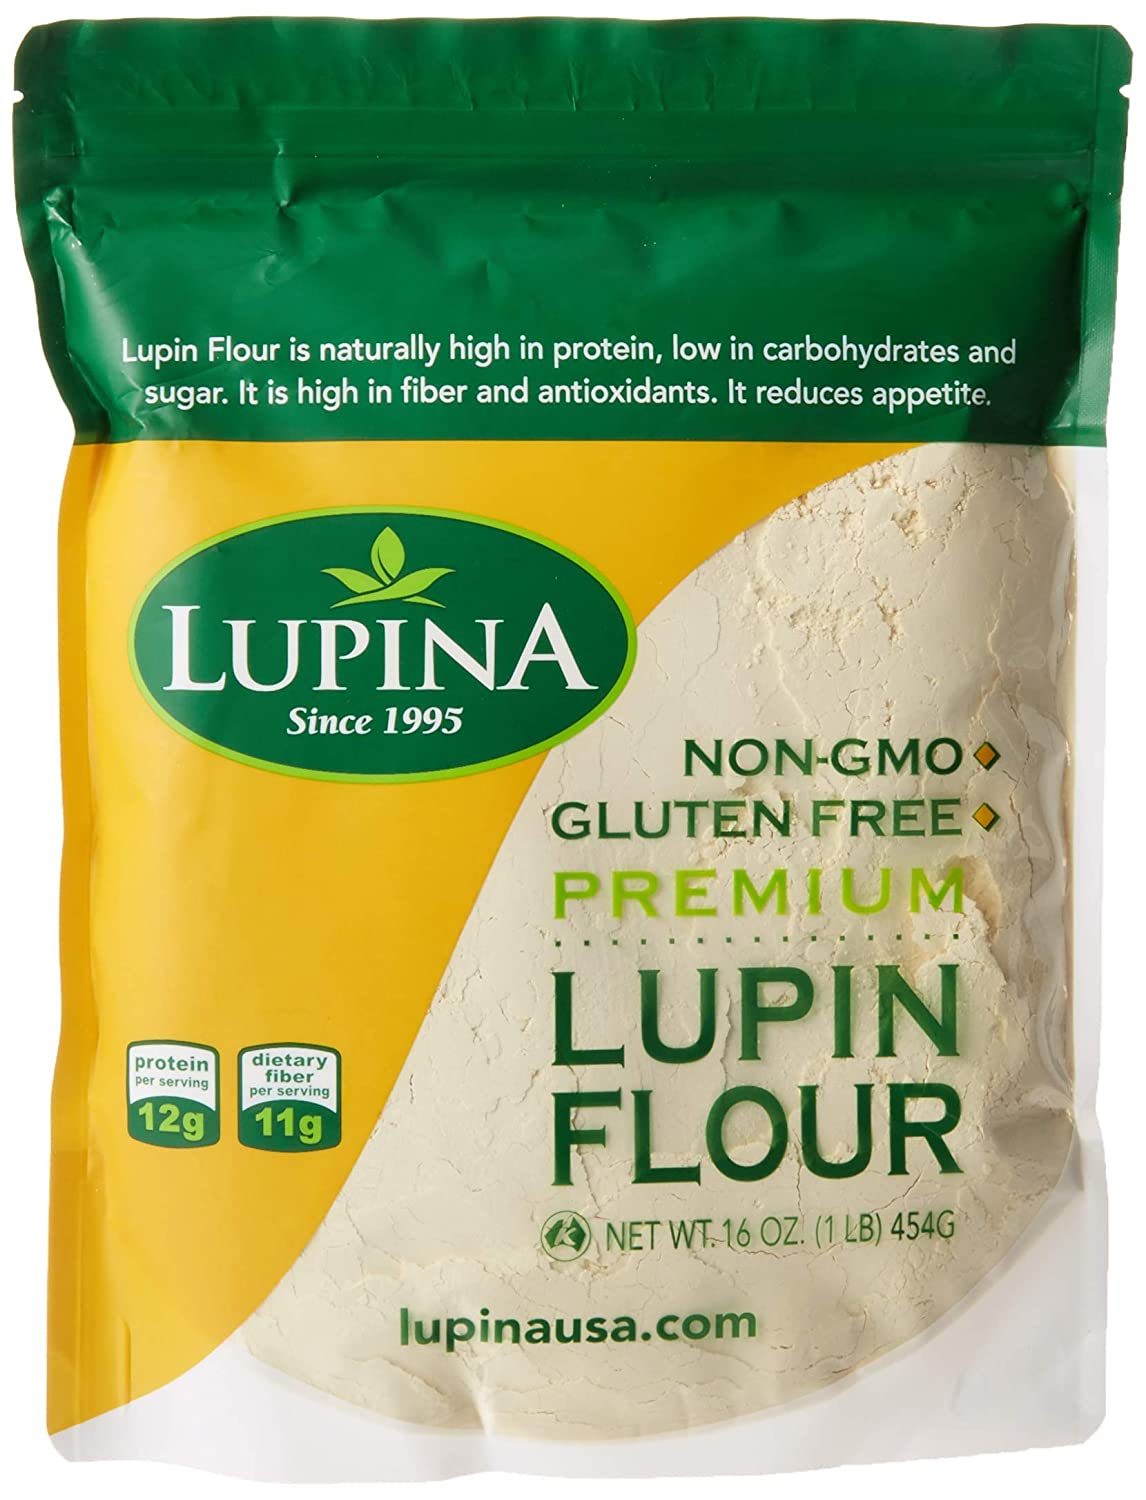 Lupin Flour